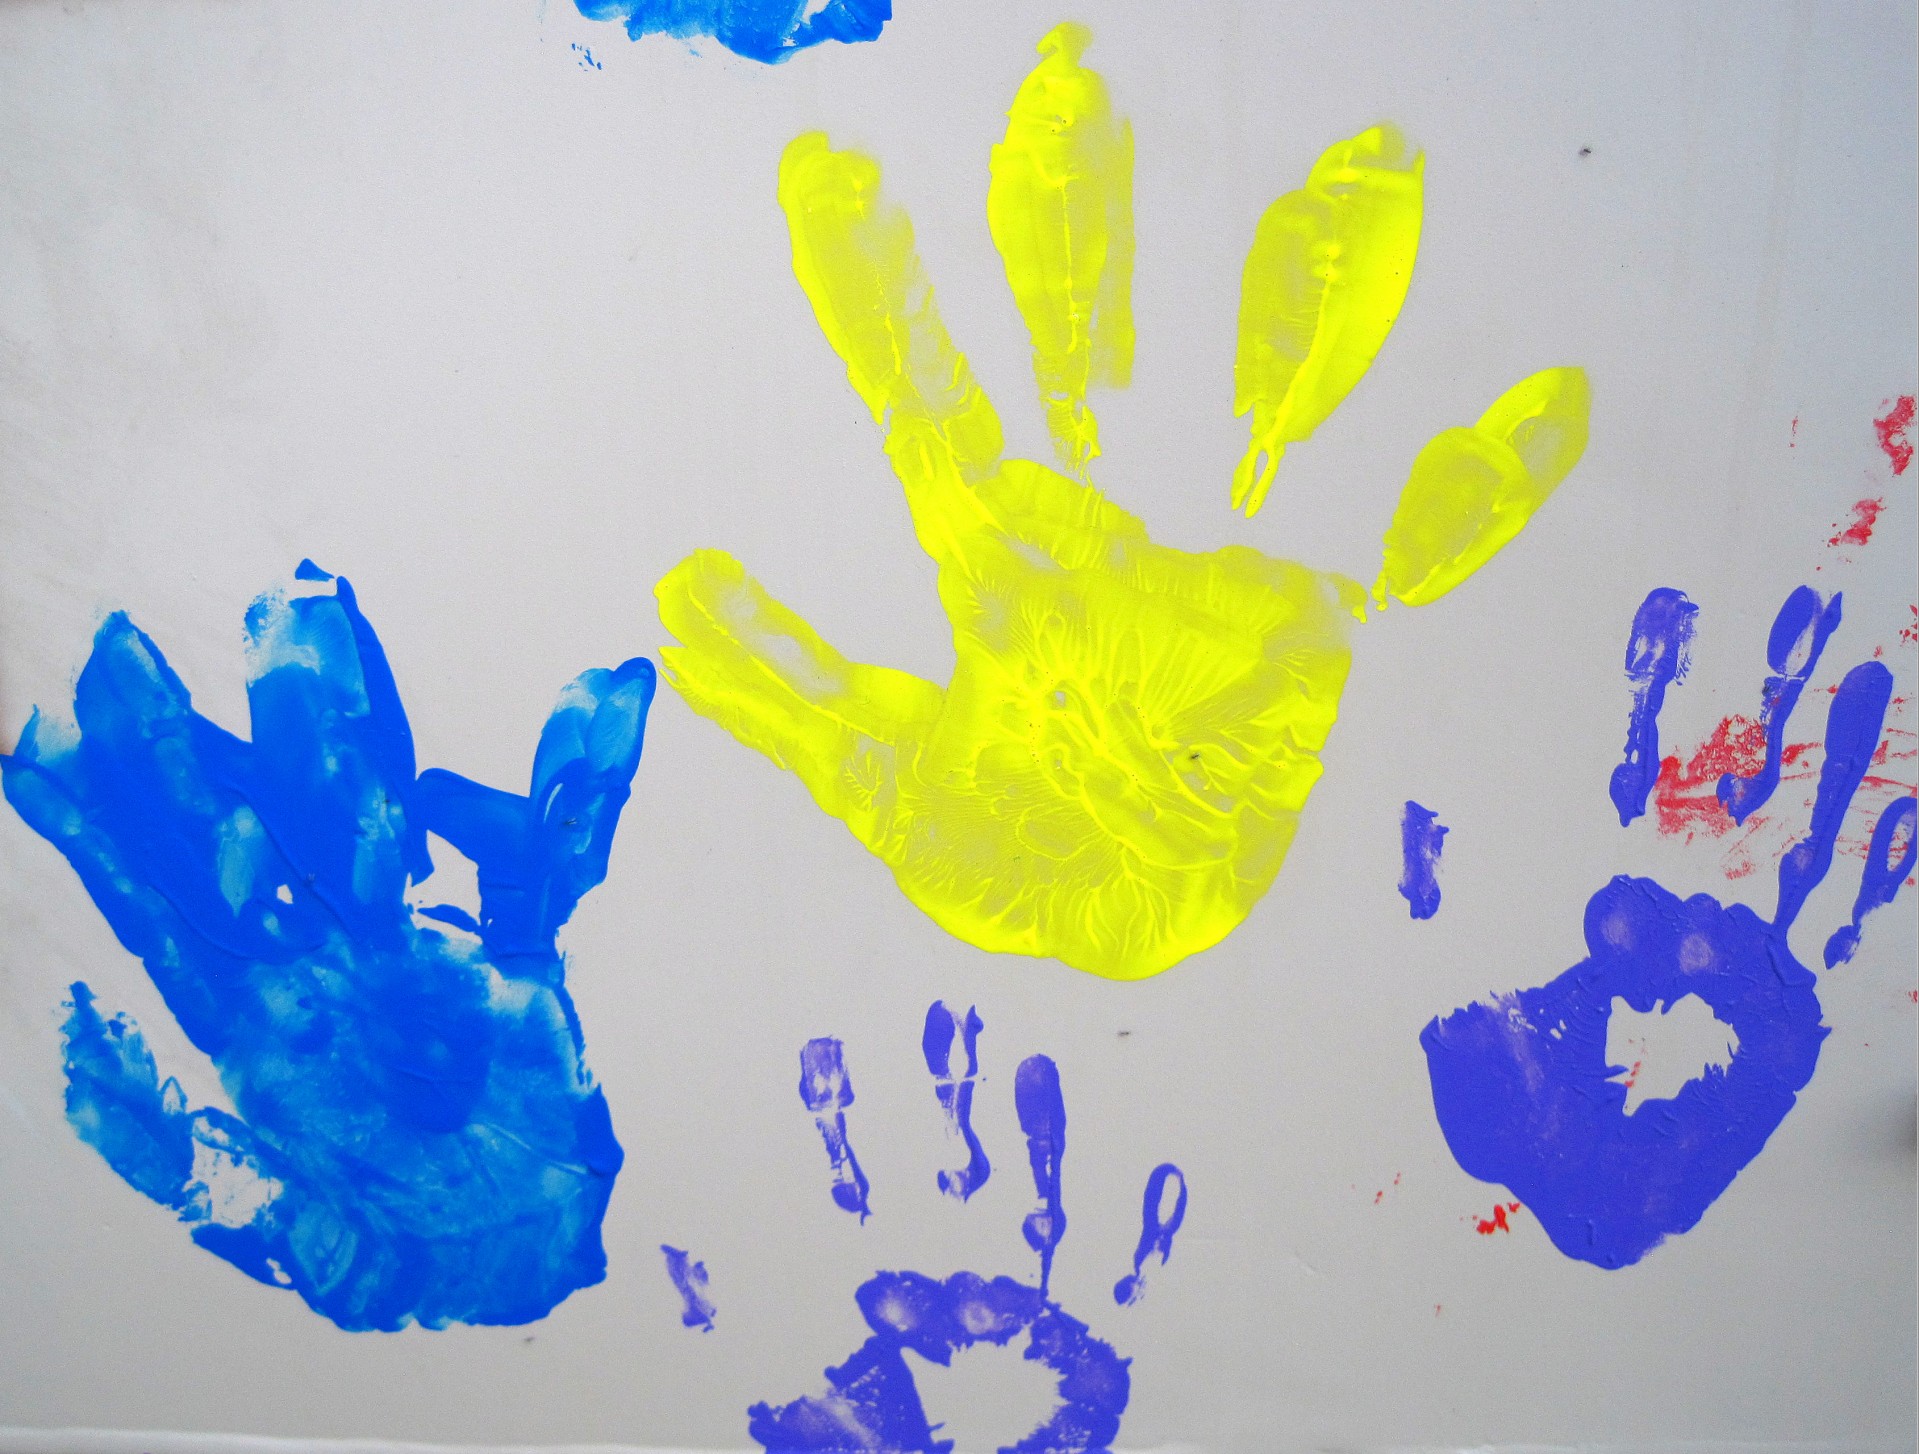 Paint-printed Hands Of Children